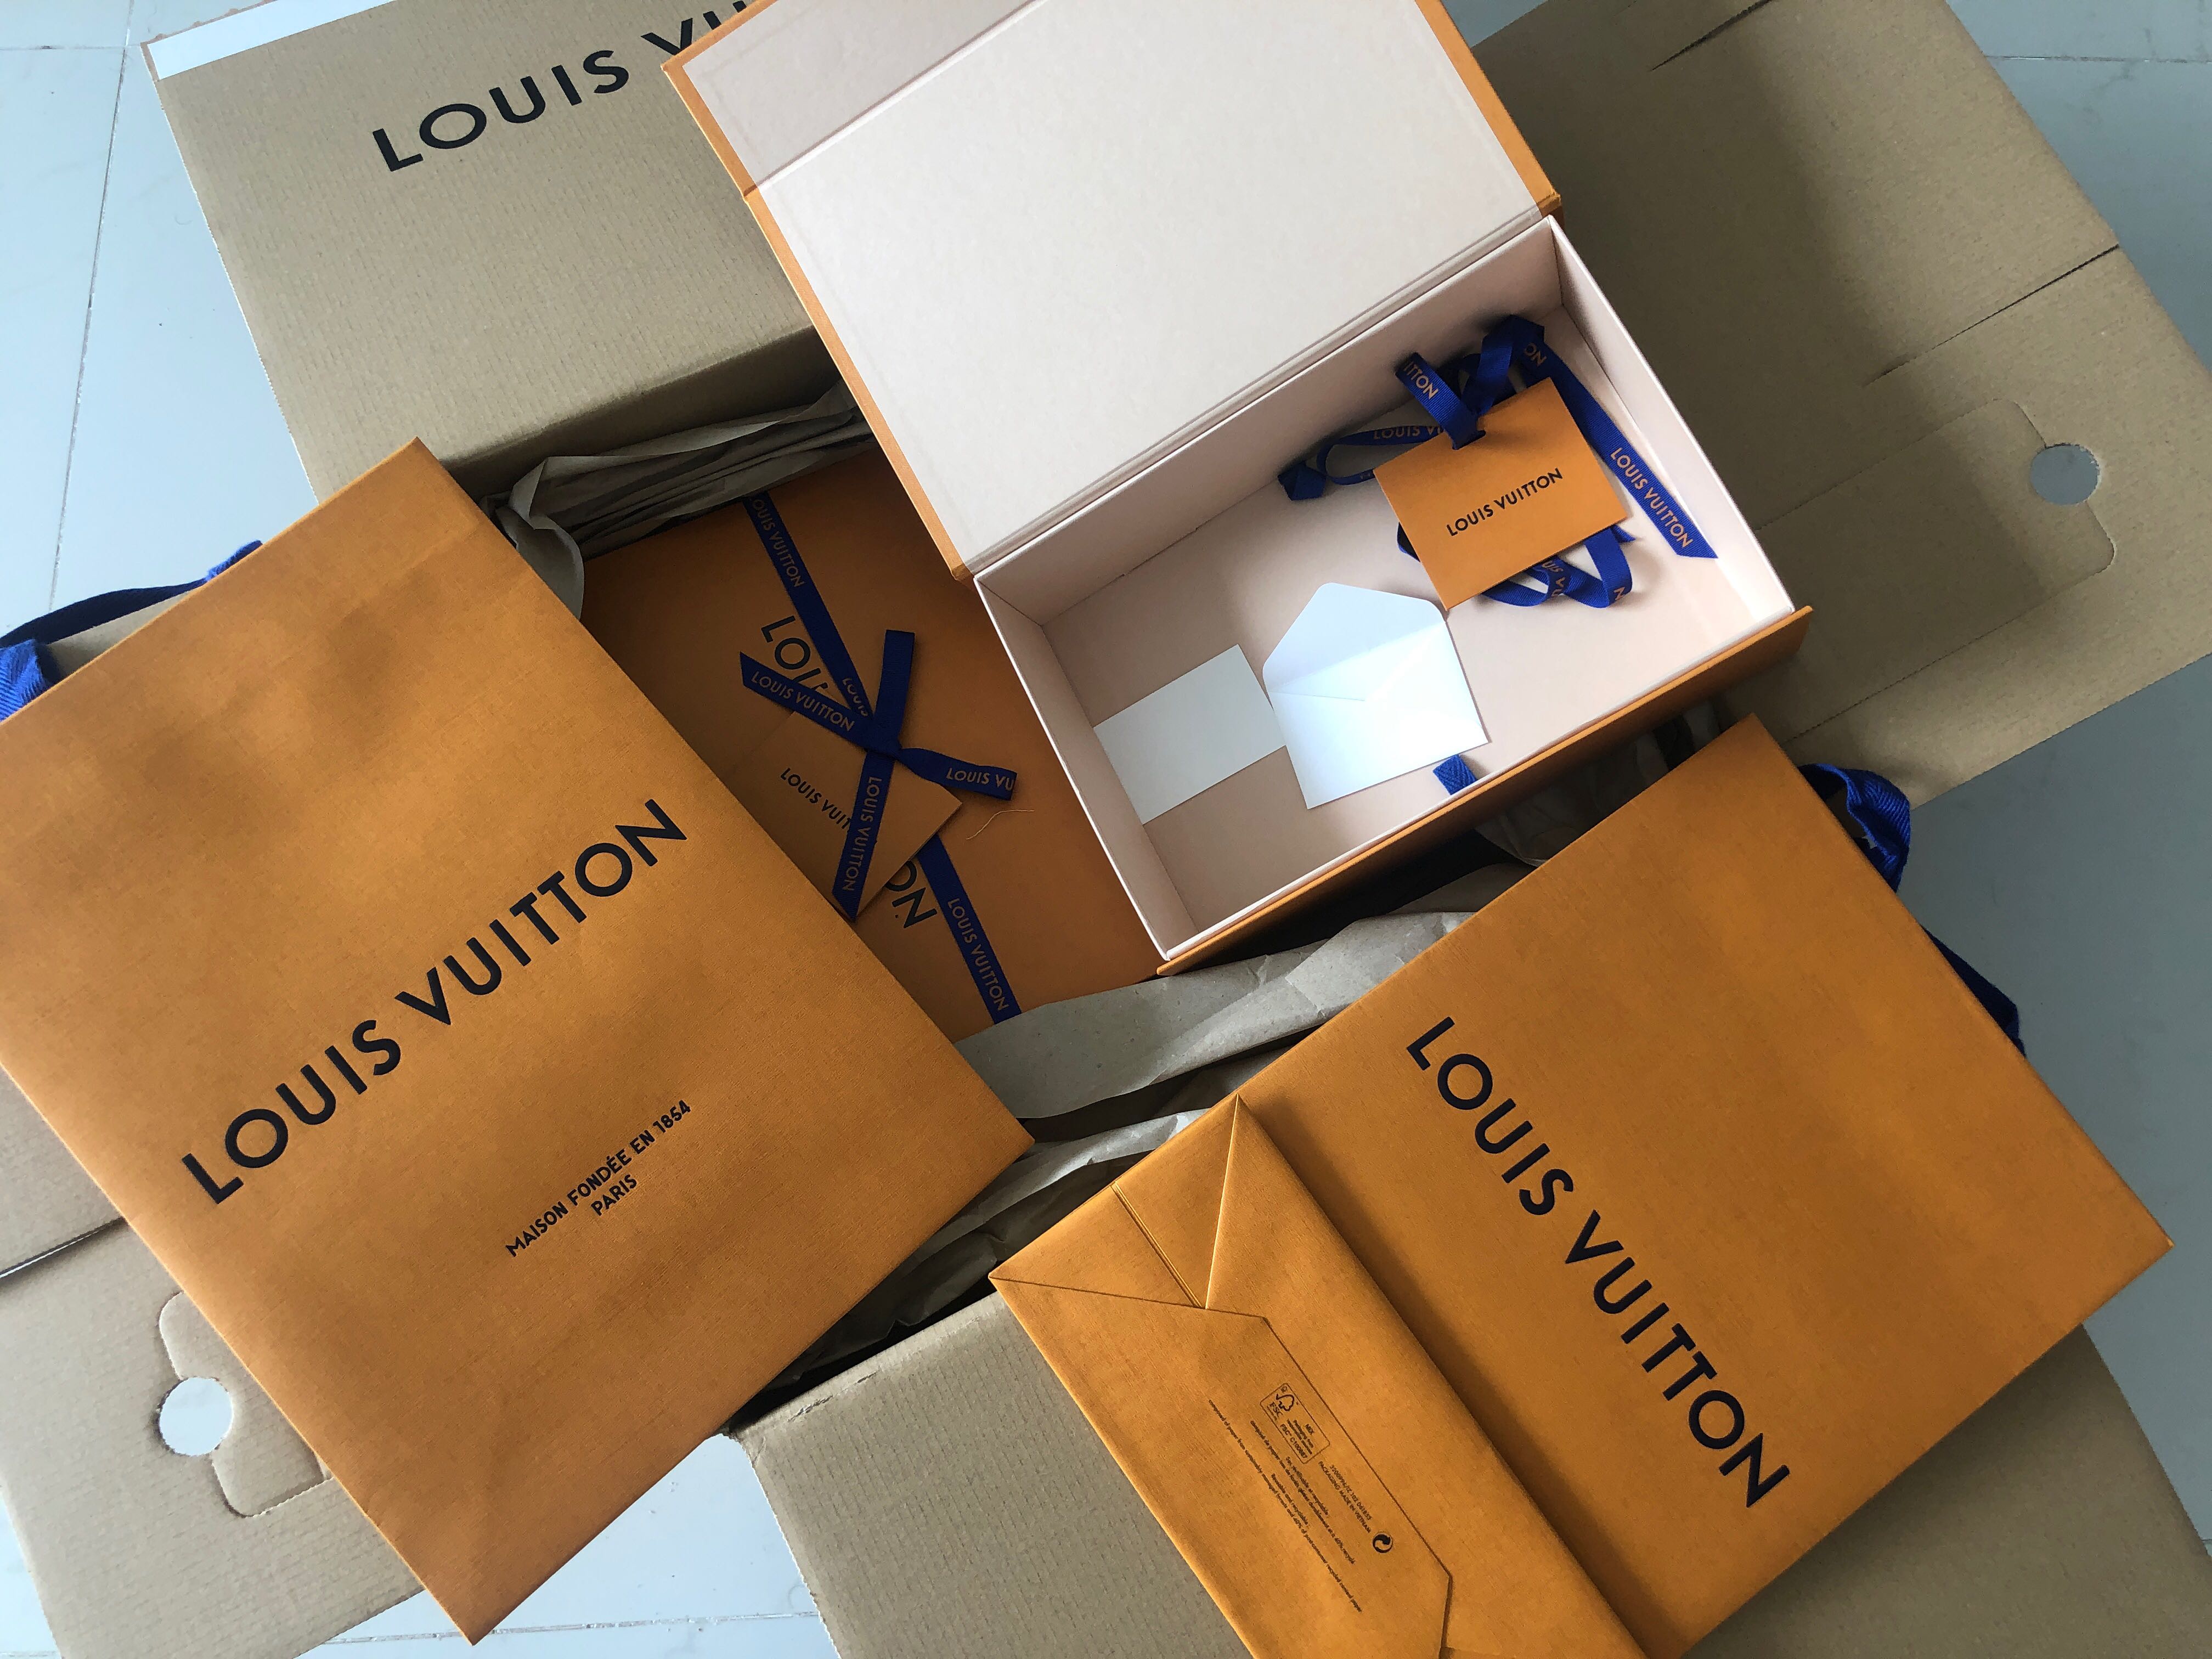 Louis Vuitton wrapping box